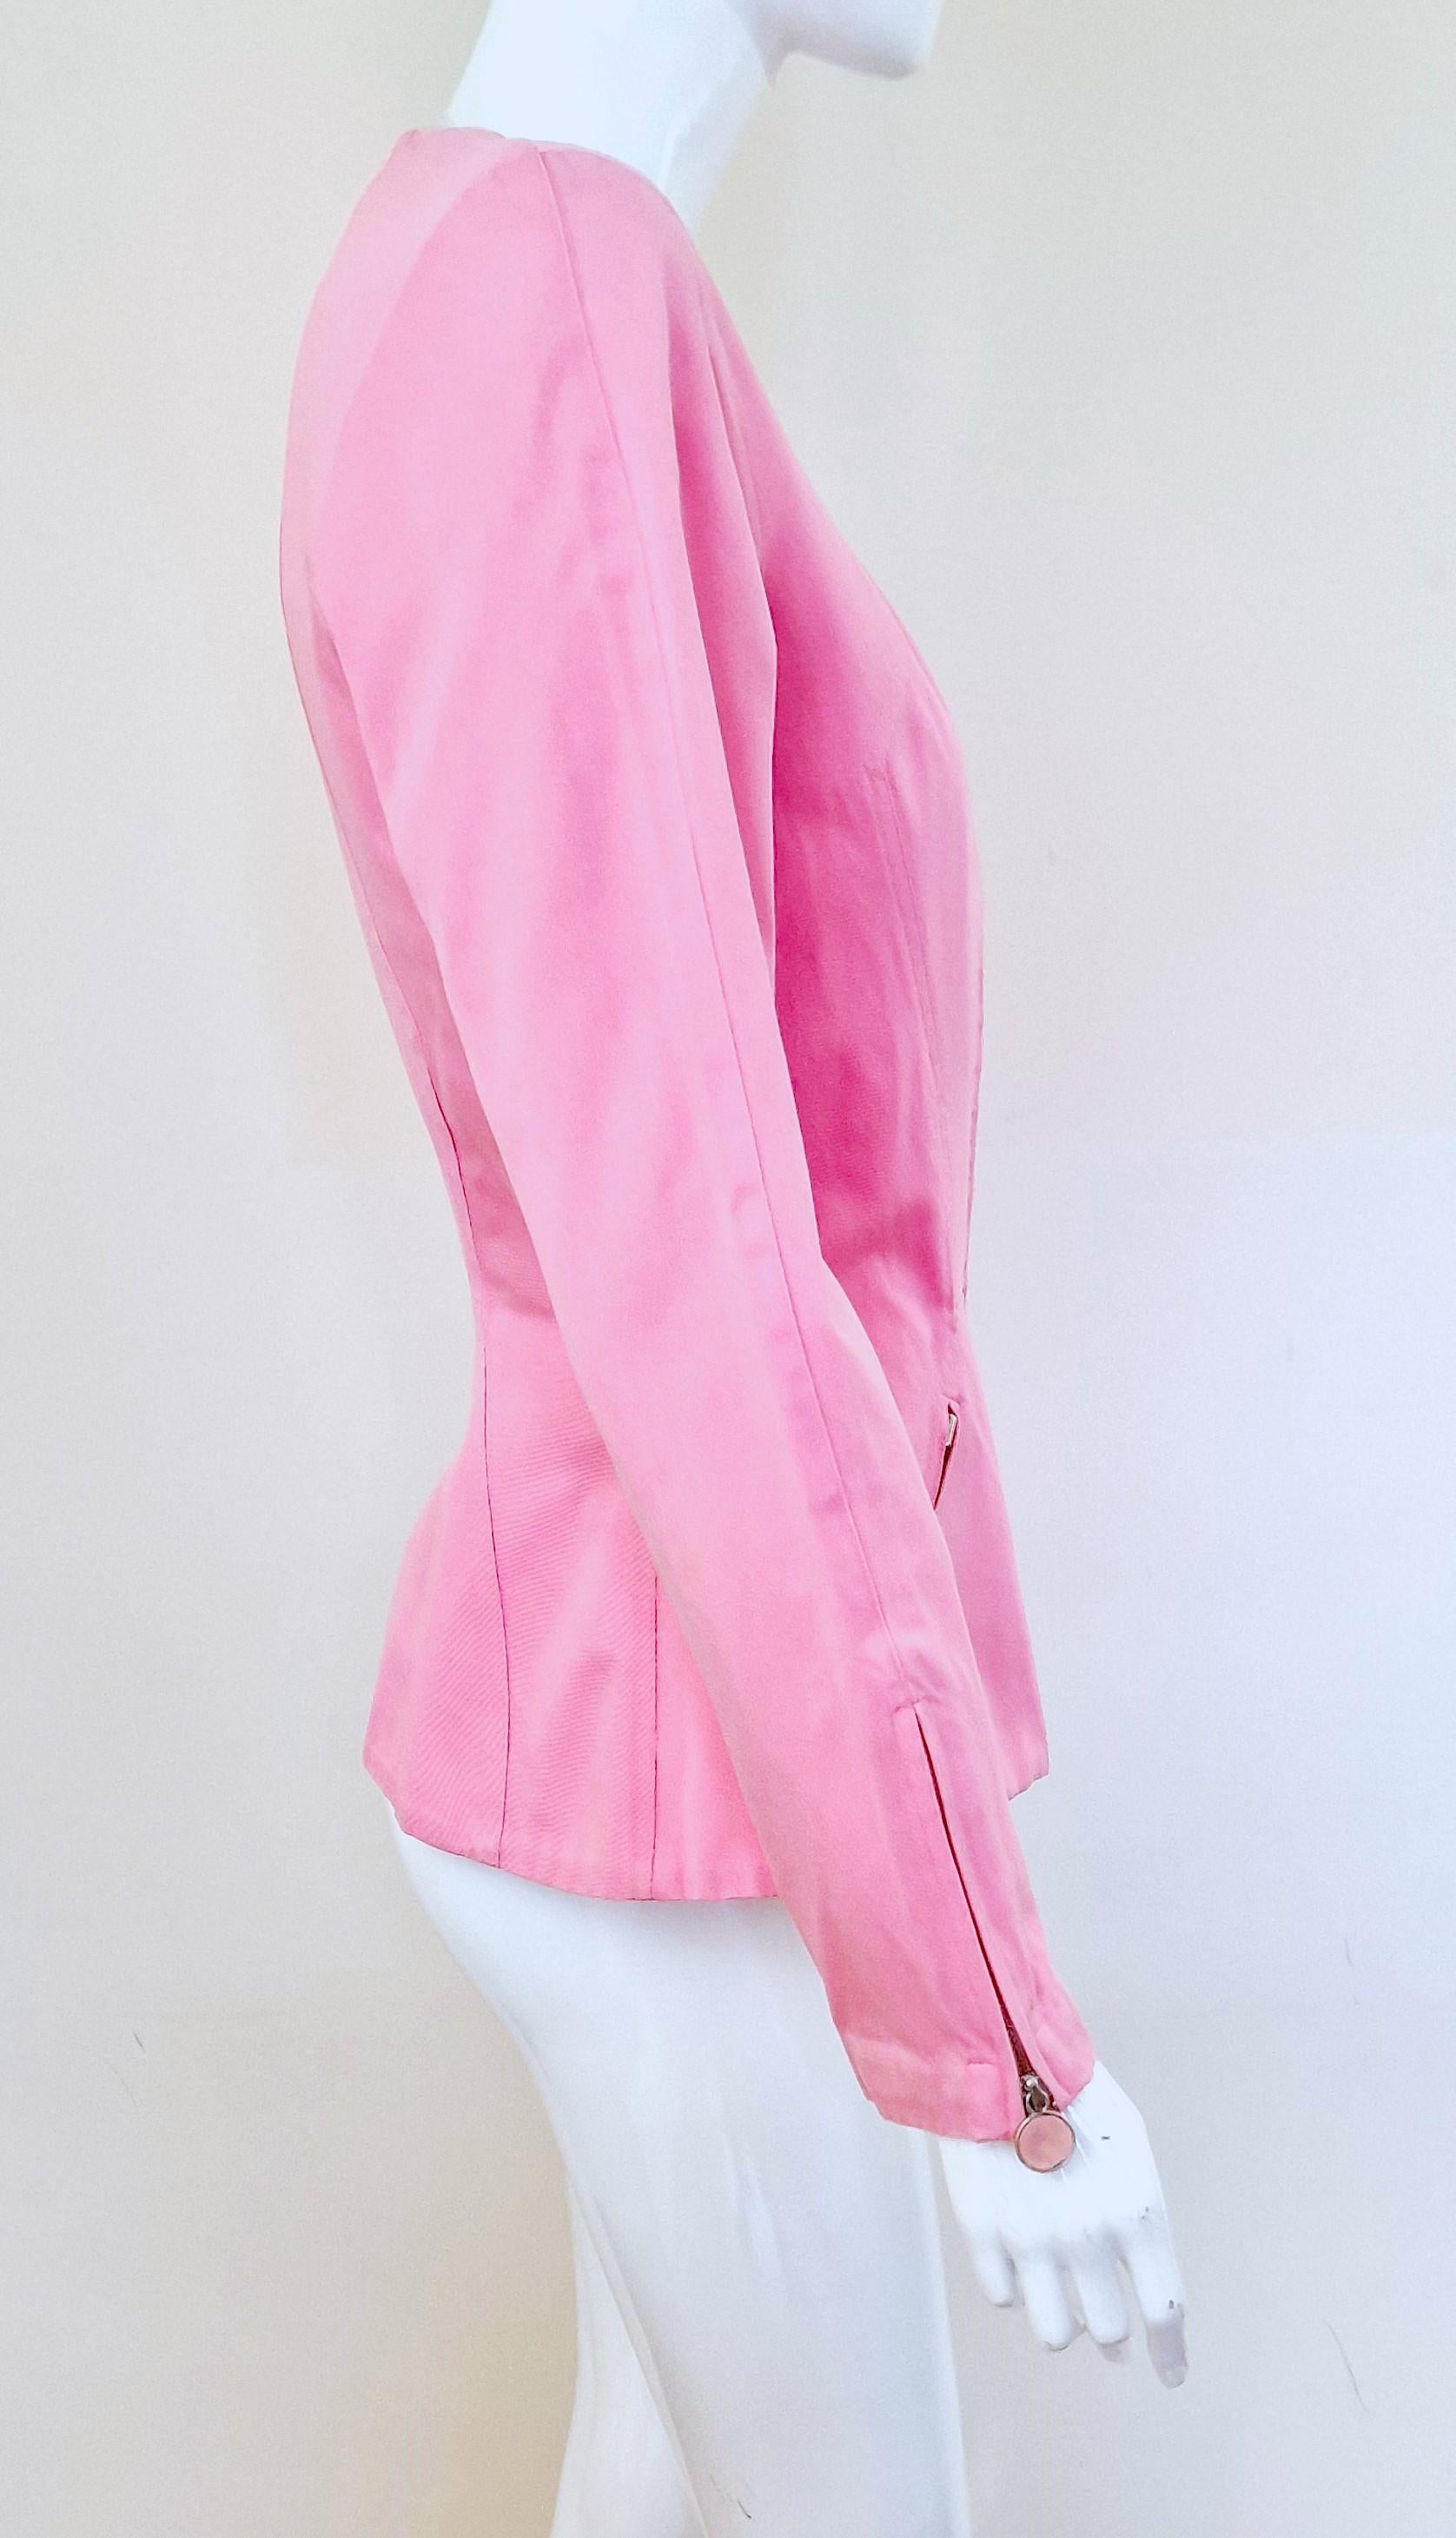 Thierry Mugler Pink Rose Wasp Waist Bee Belt Vintage Trademark Medium Jacket For Sale 4